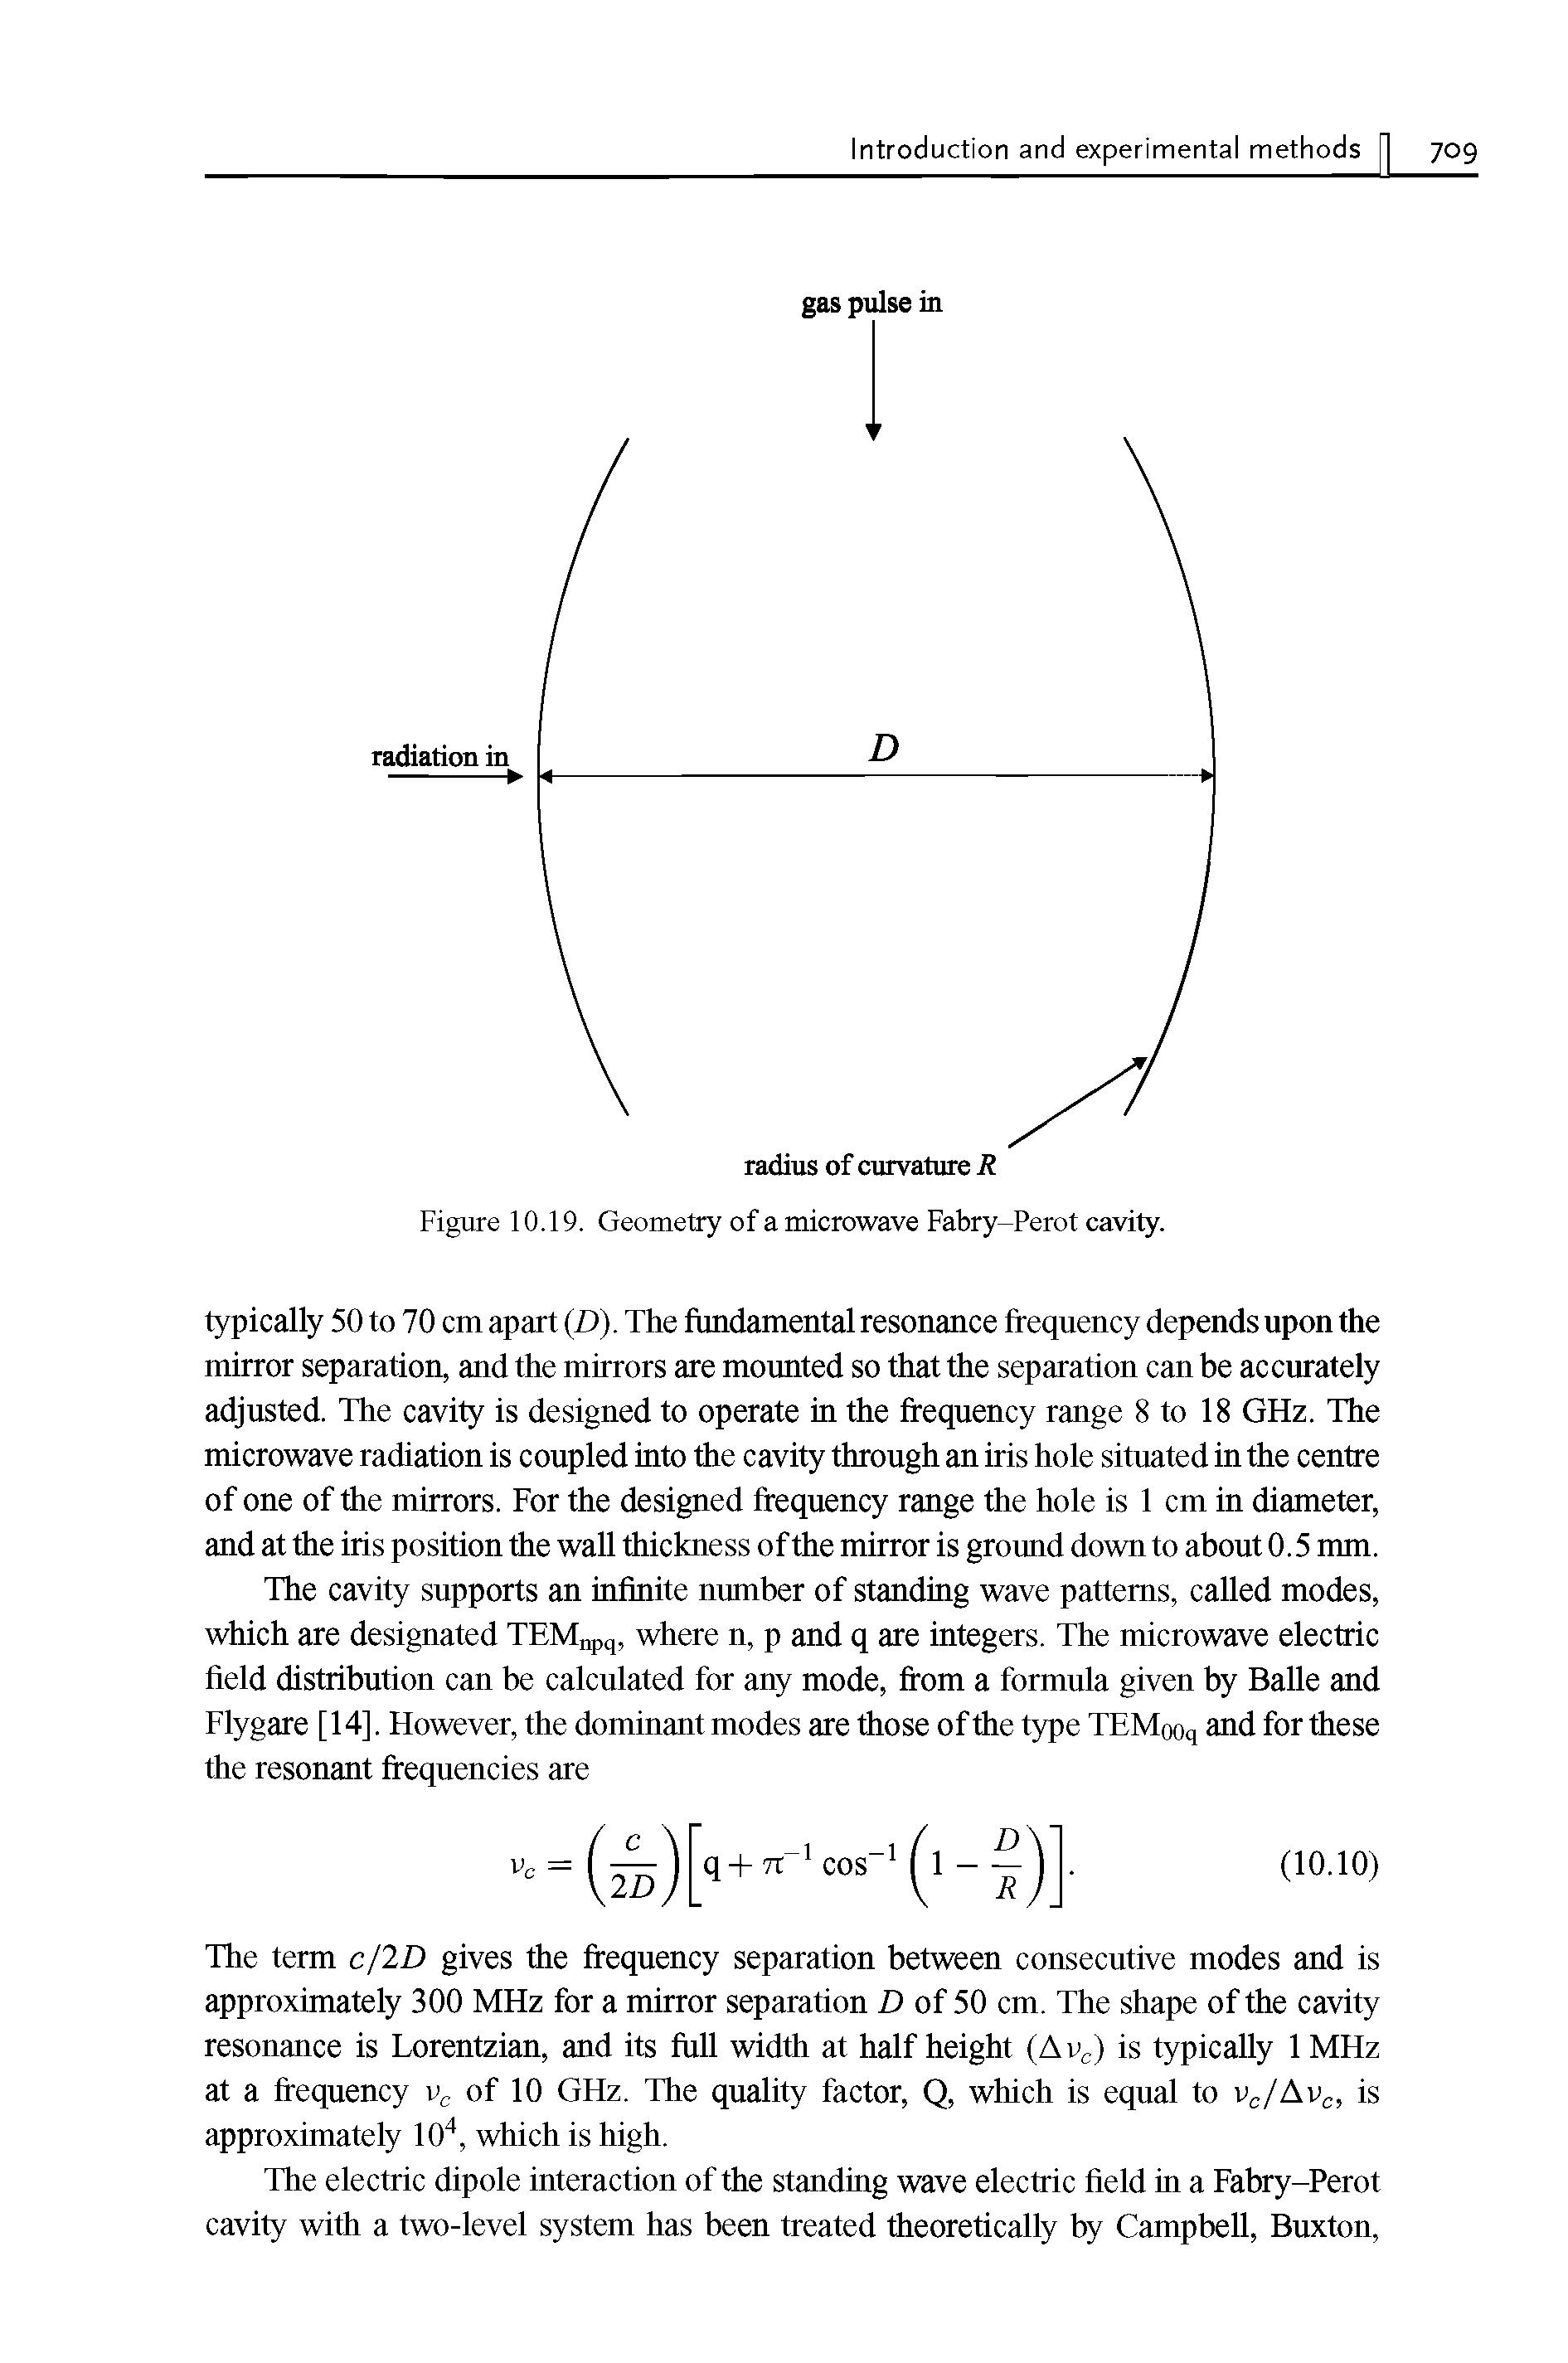 Figure 10.19. Geometry of a microwave Fabry-Perot cavity.